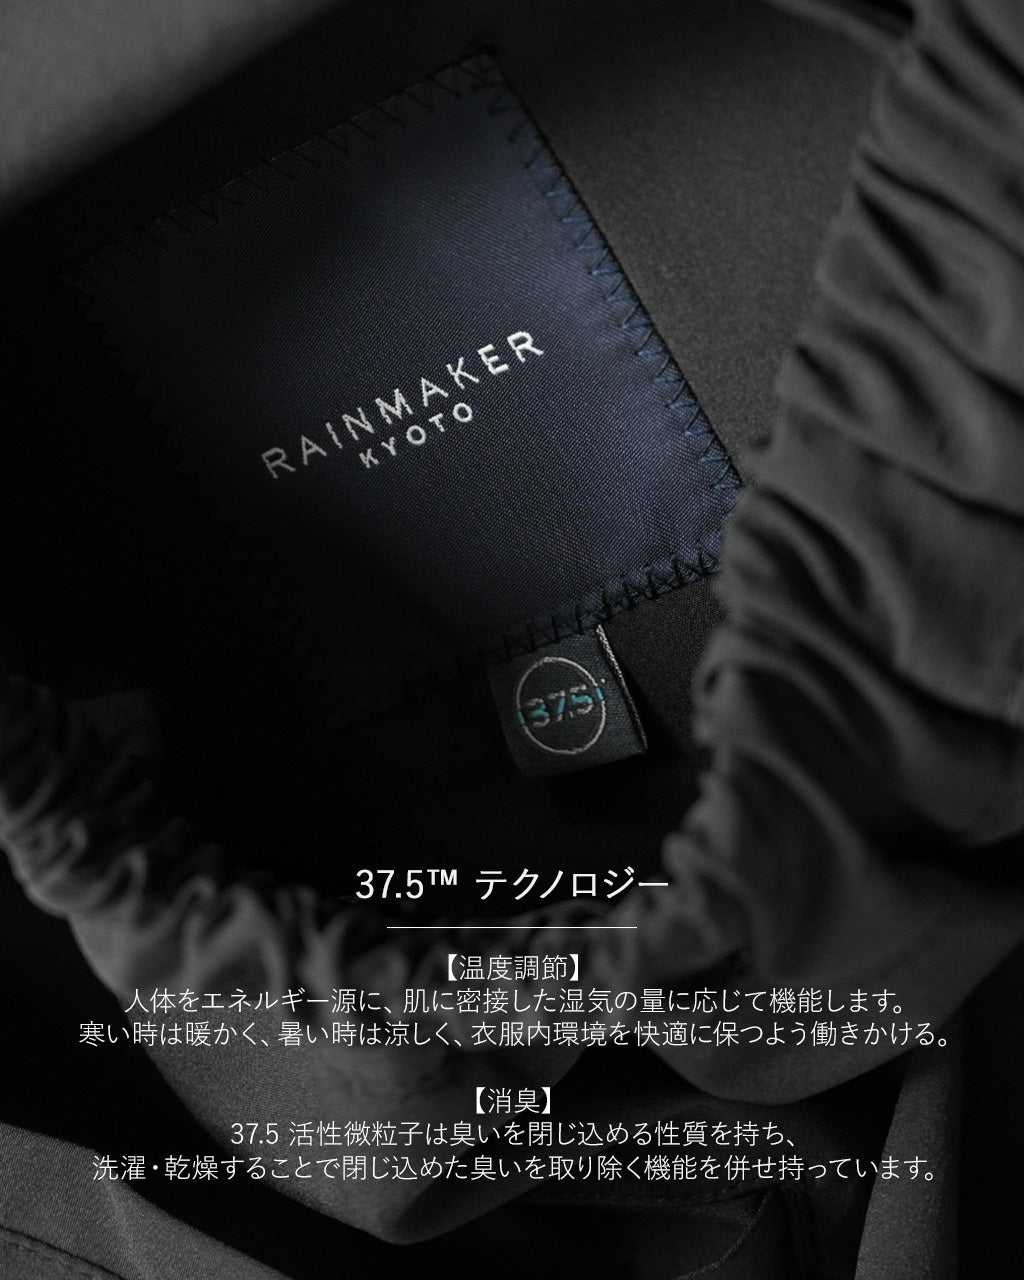 RAINMAKER レインメーカー 37.5 テクノロジー サイドベルト ドウギパンツ 37.5 TECHNOLOGY SIDE BELTED DOUGI PANTS イージーパンツ メンズ  RM241-017【送料無料】